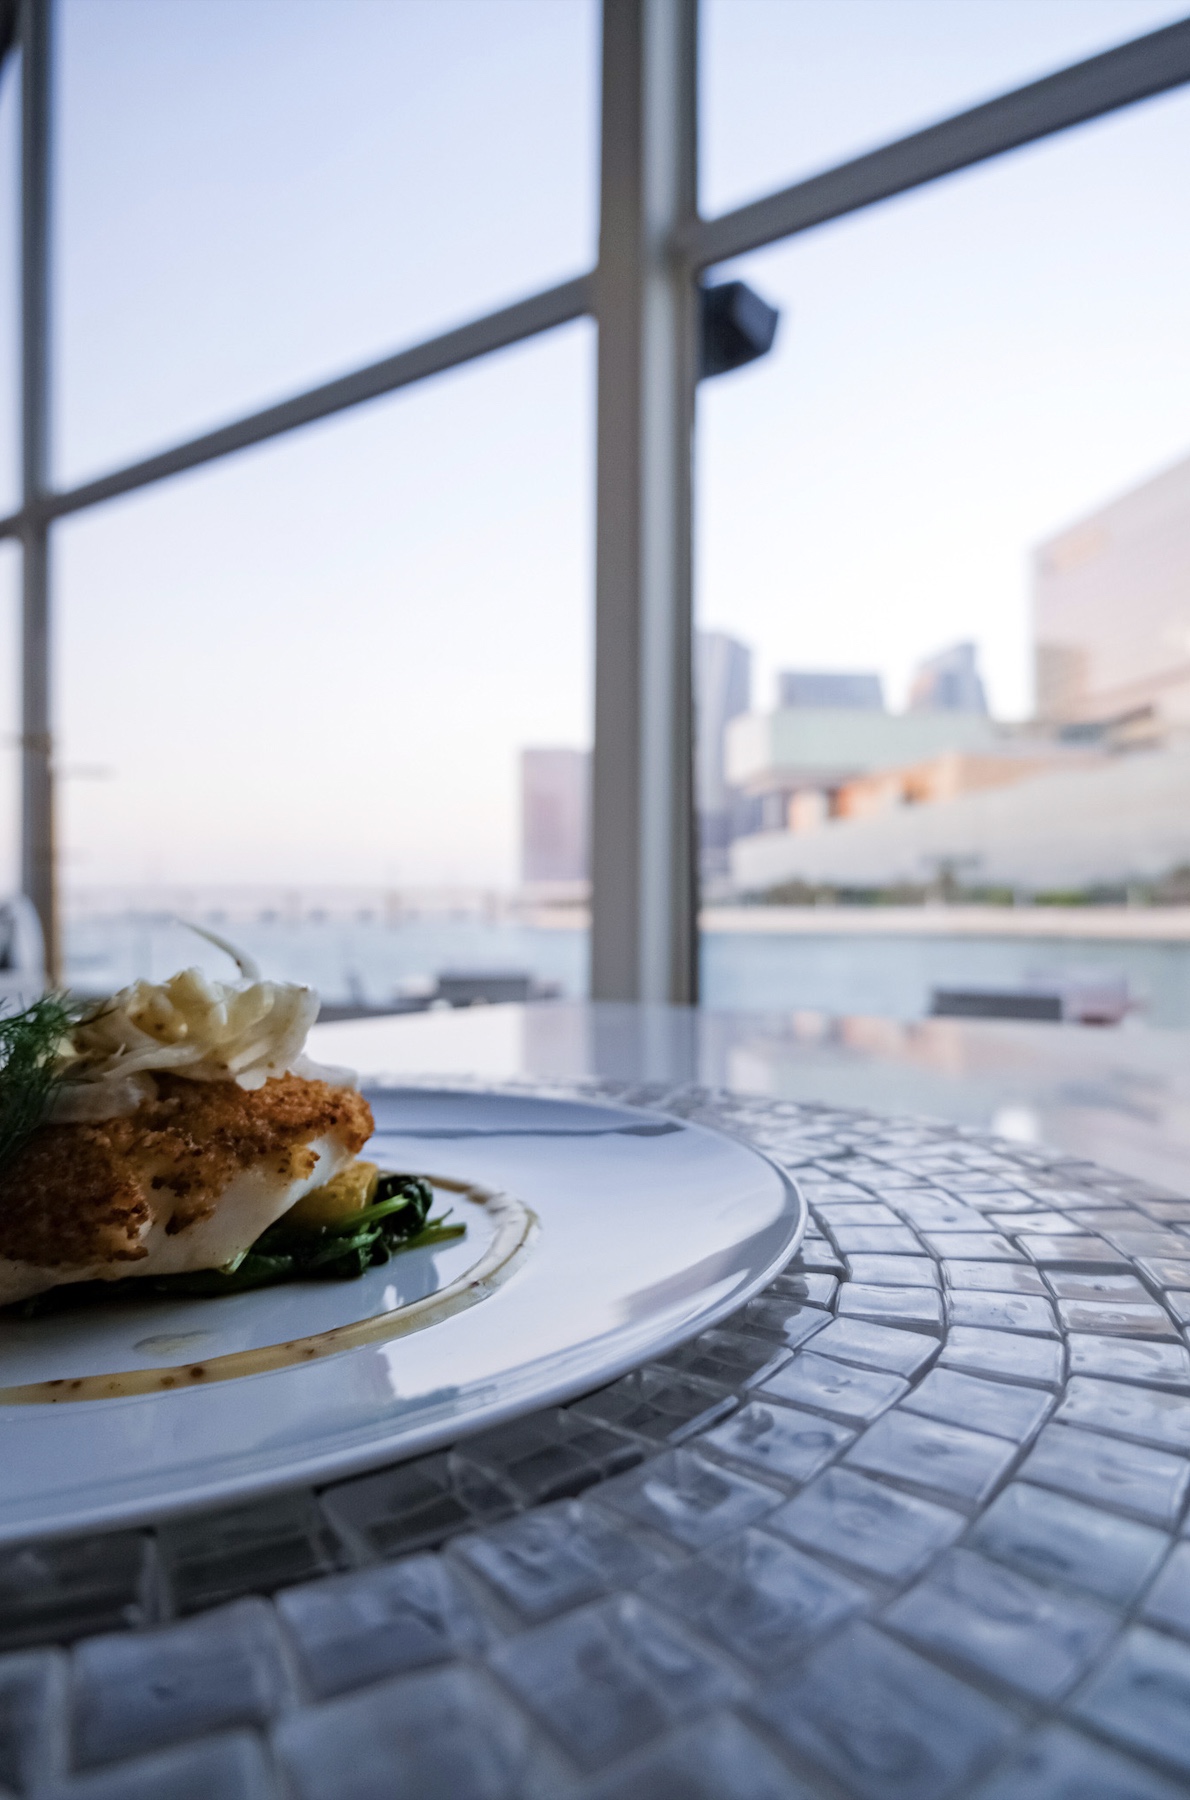 Abu Dhabi's best dining deals